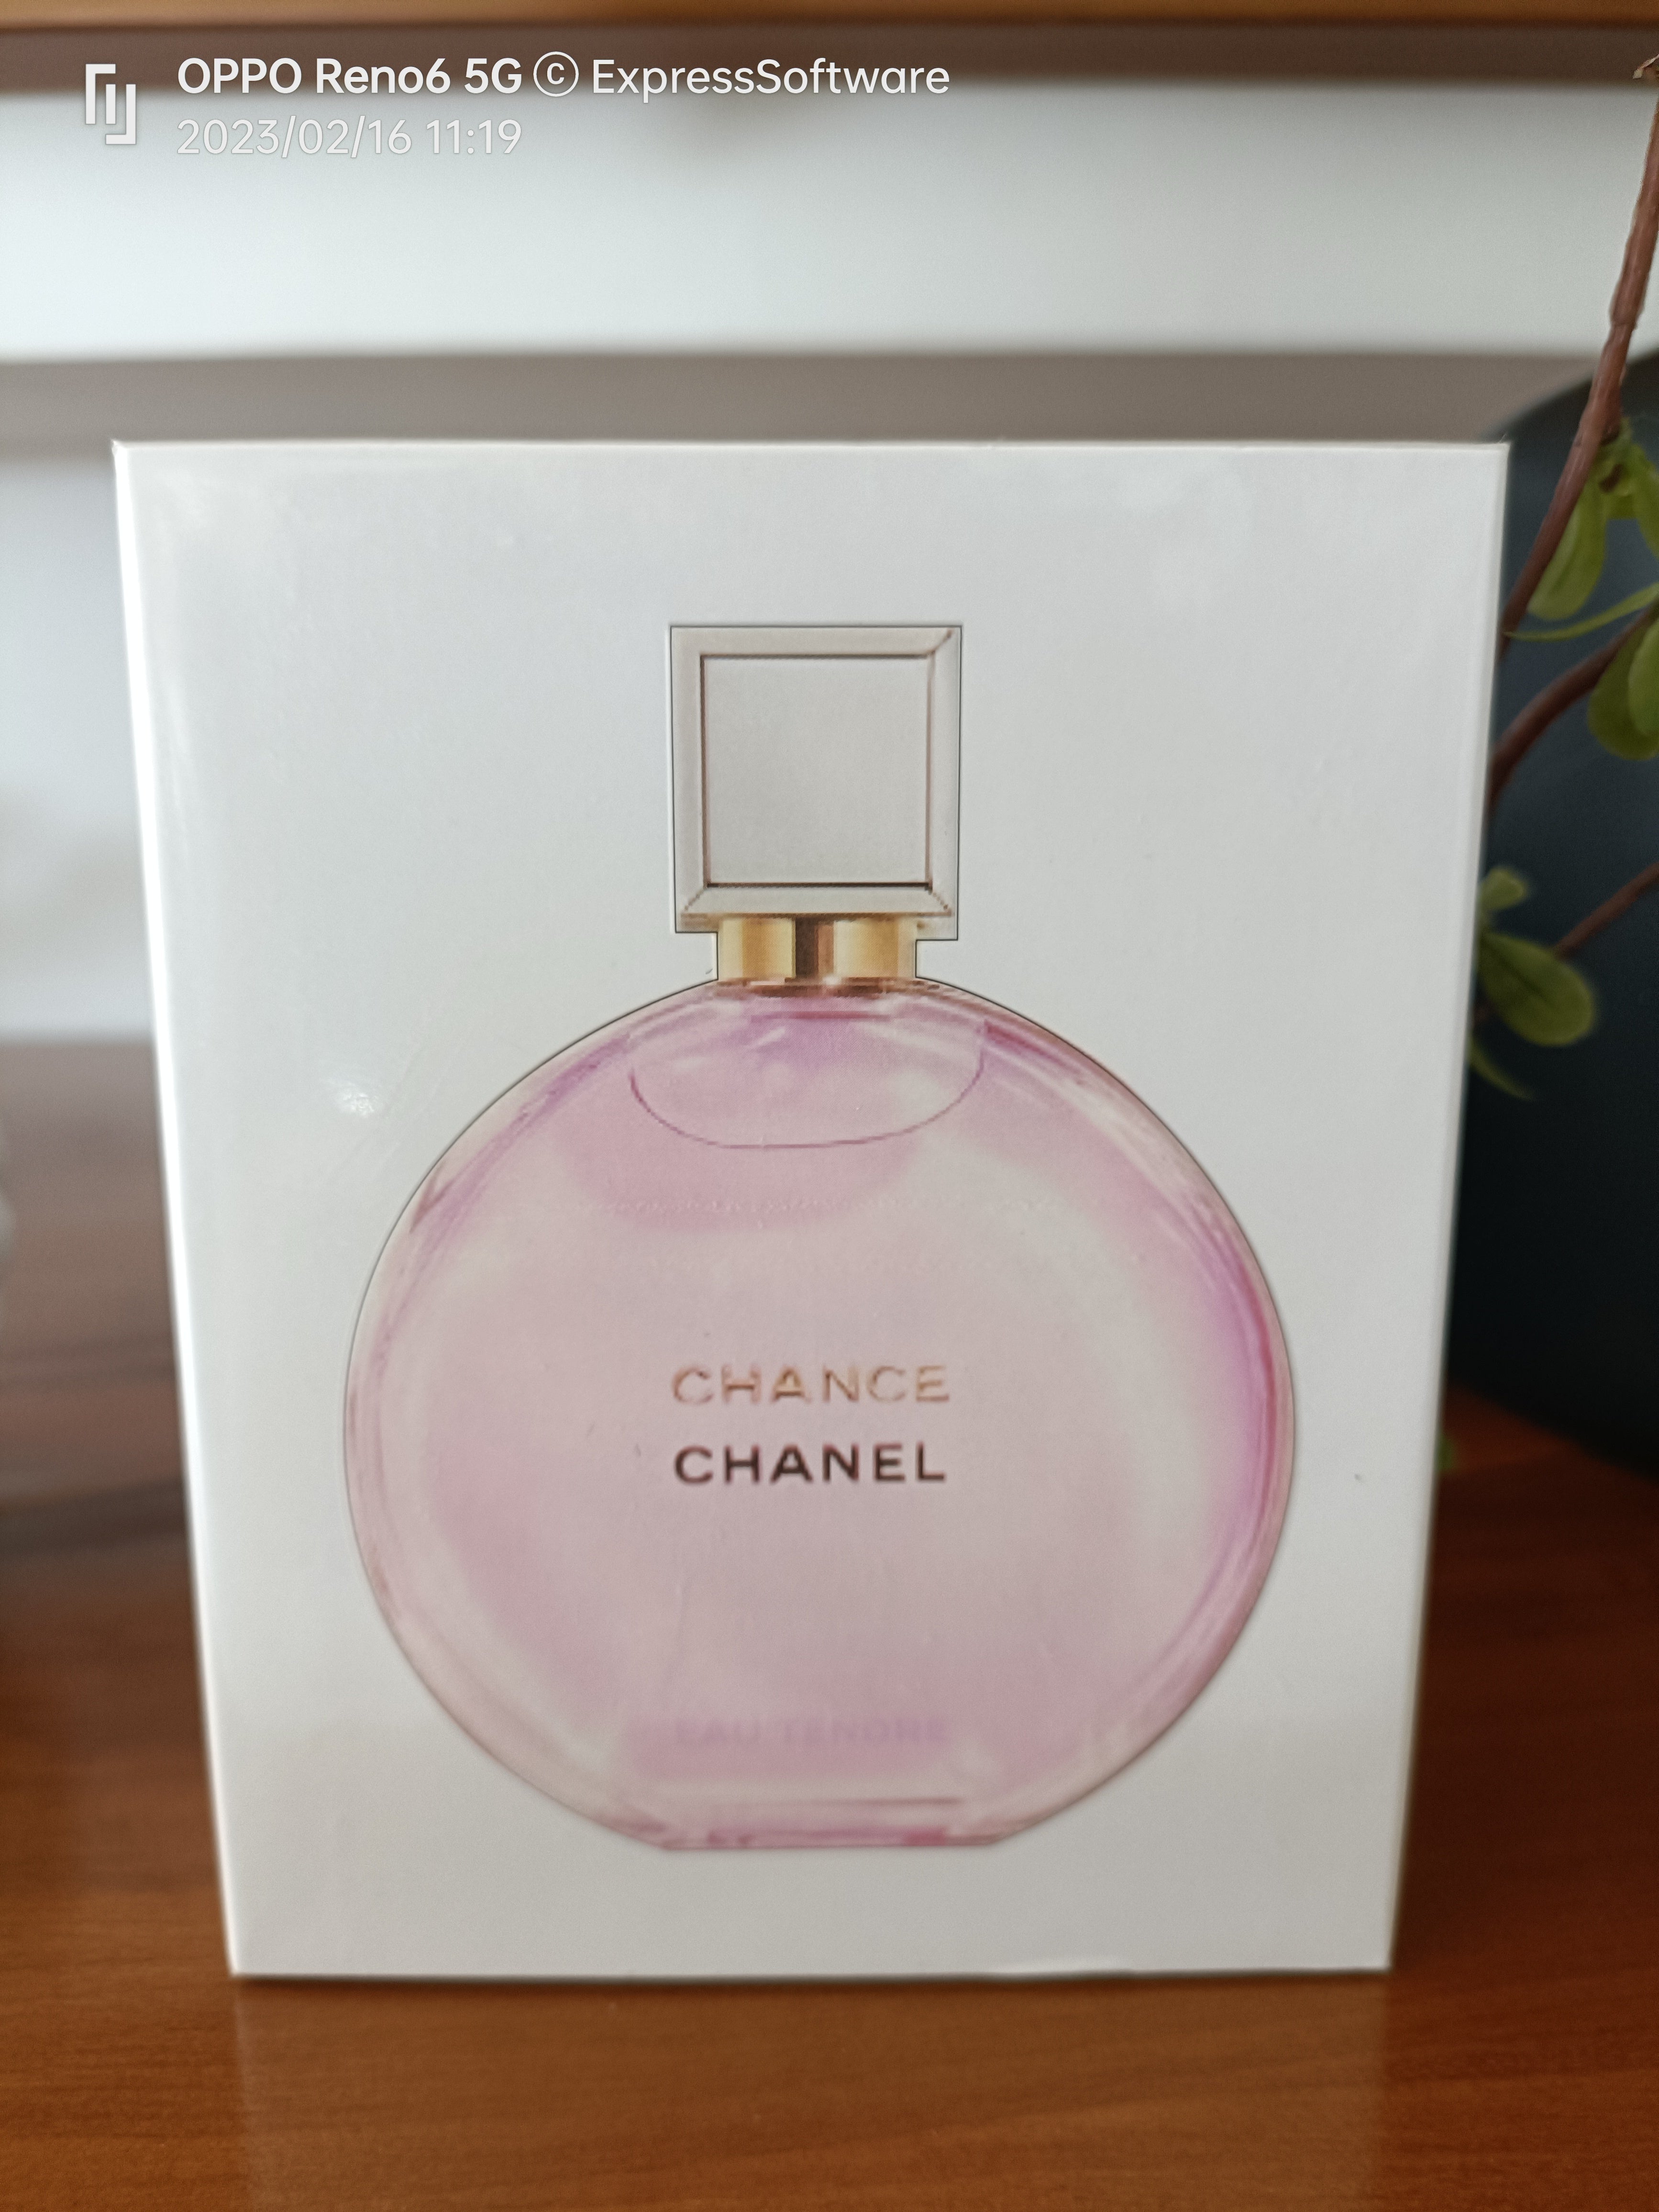 NEW Chanel Chance Eau Fraiche EDT Spray 100ml Perfume